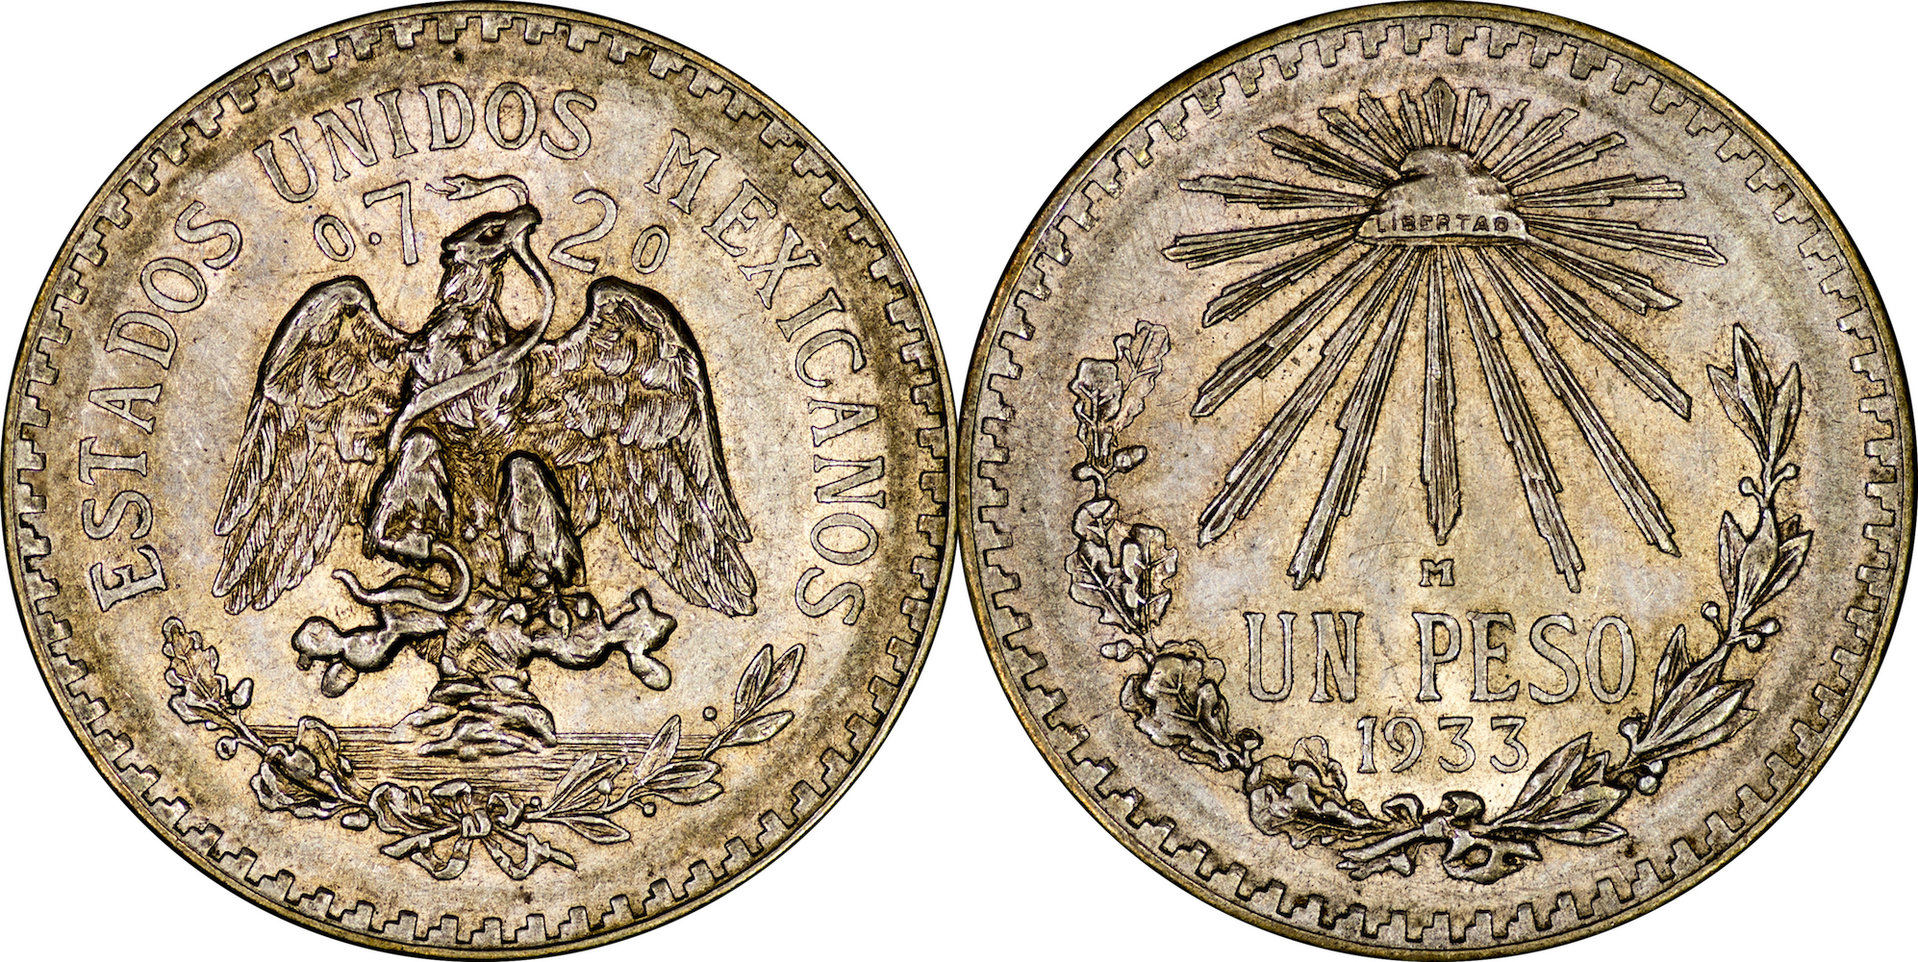 Mexico - 1933 1 Peso.jpg